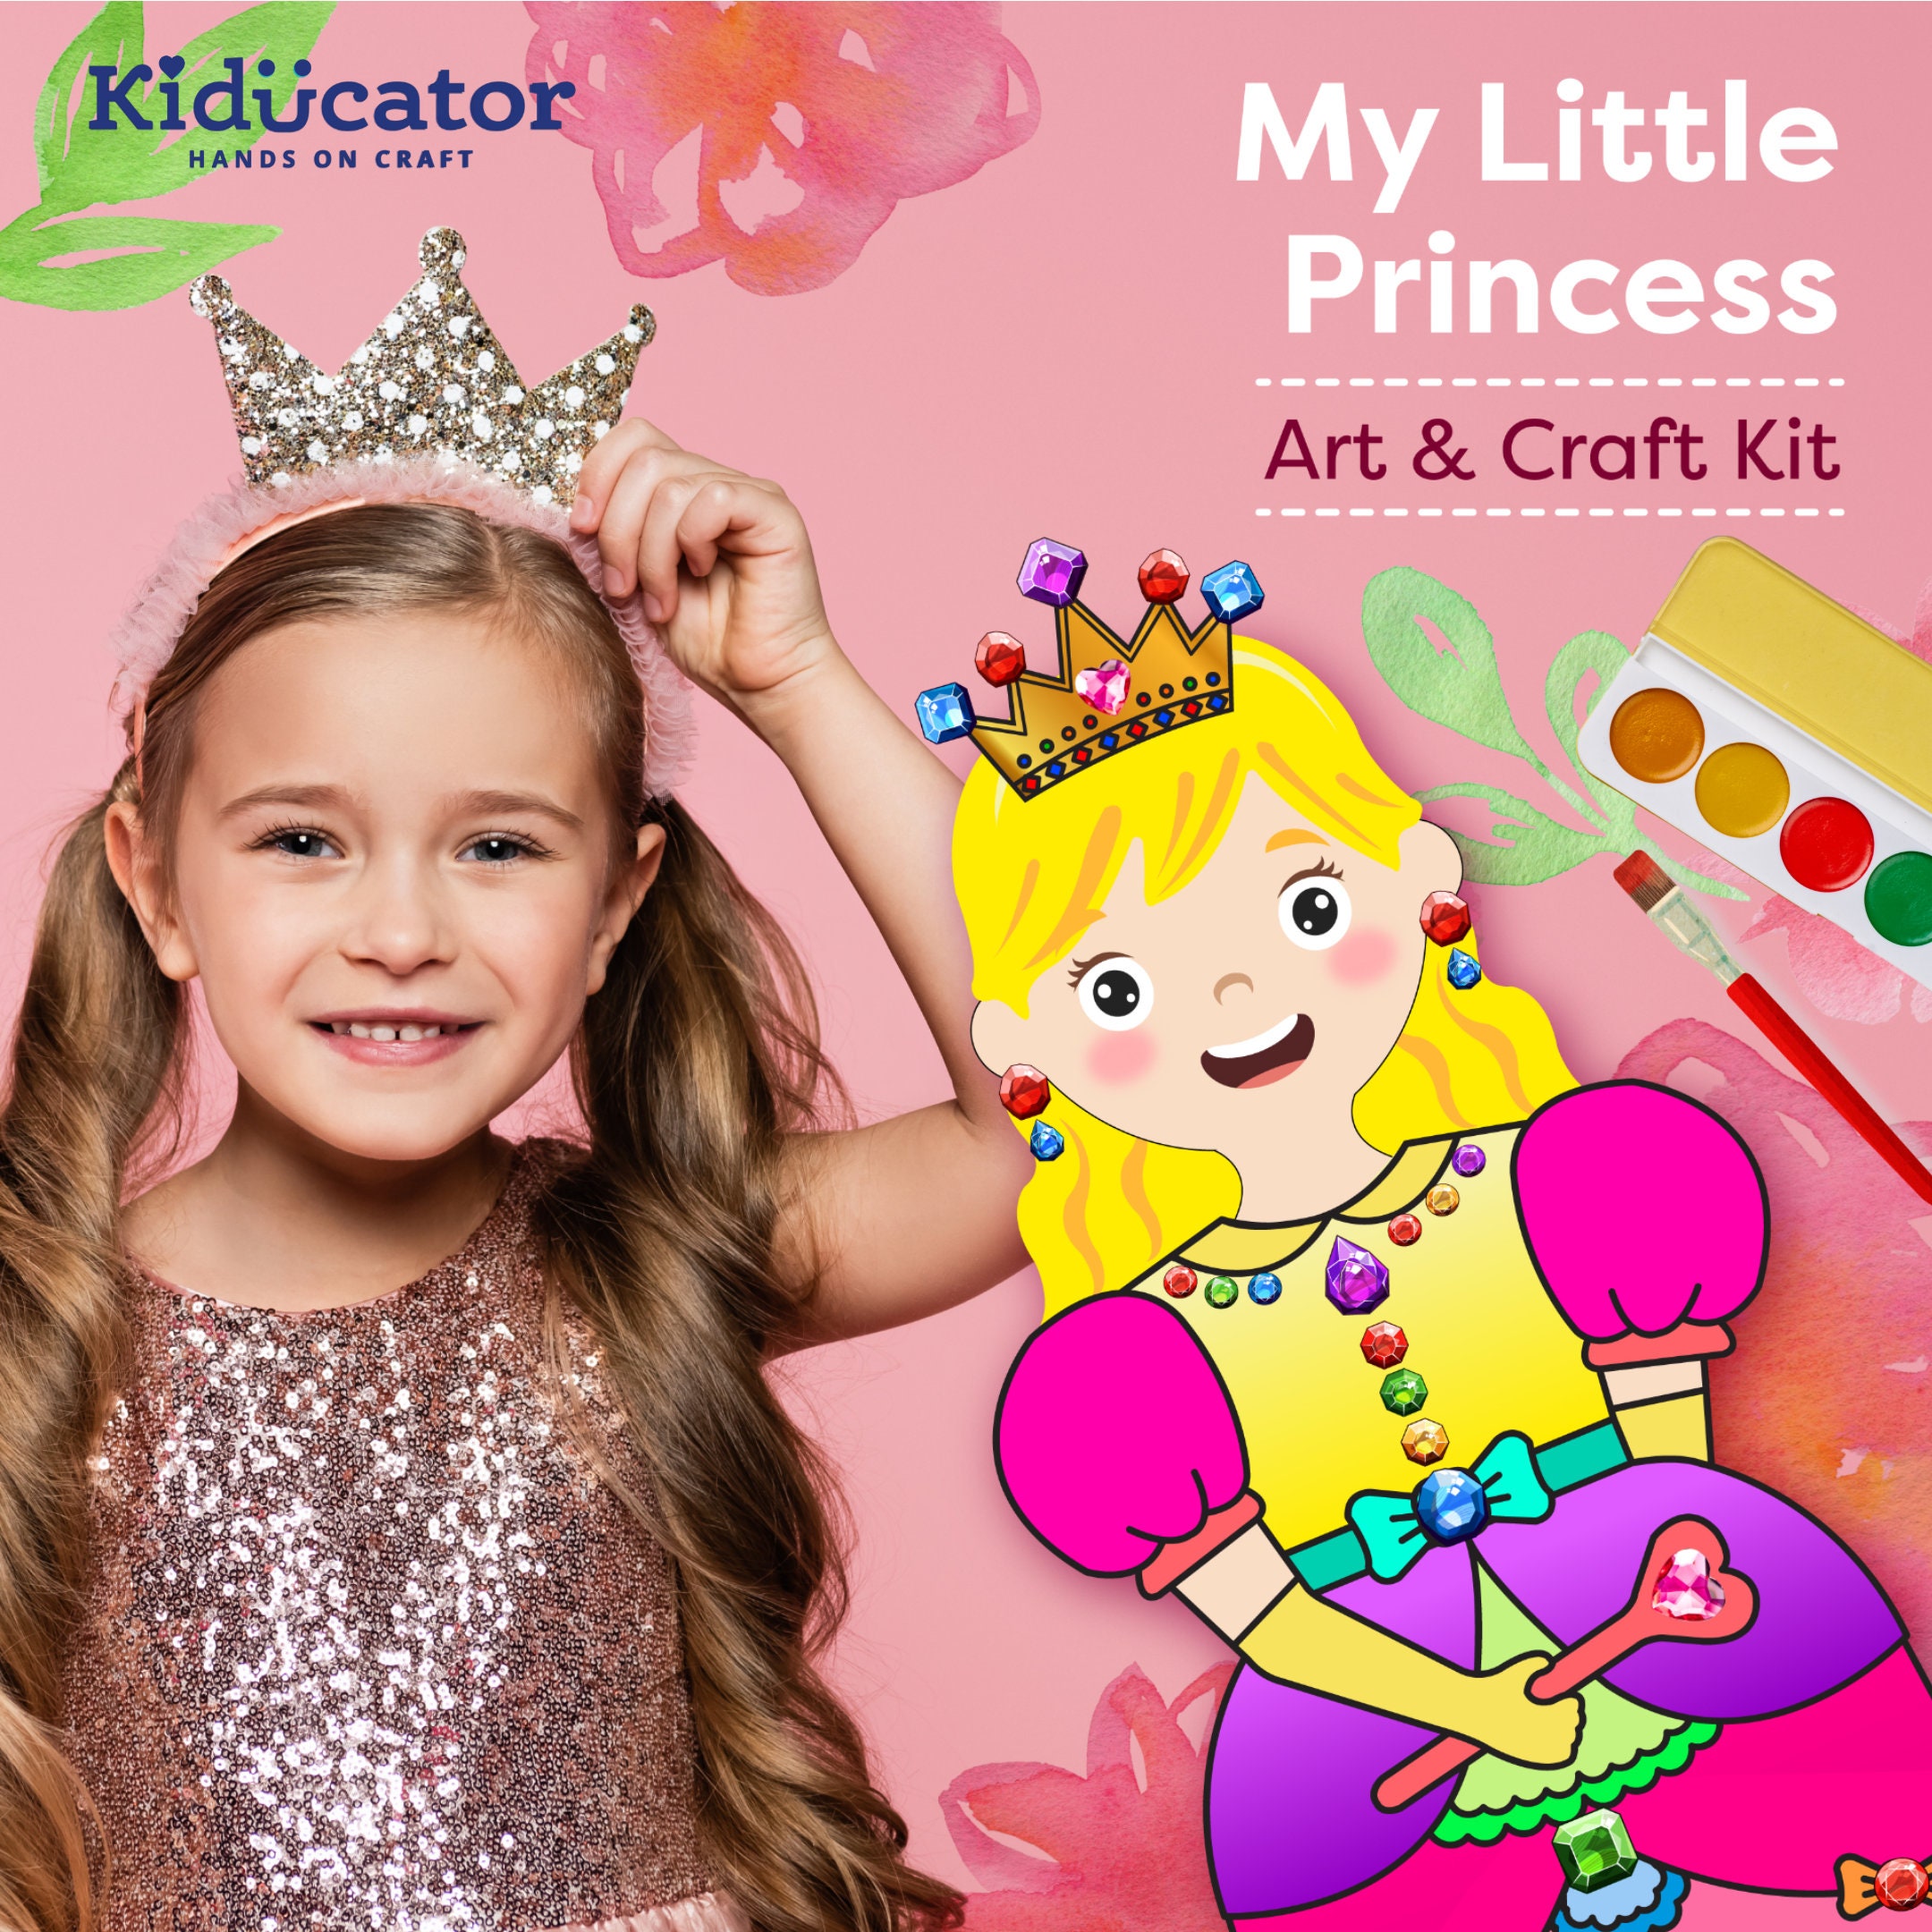 My Little Princess Art & Craft Kit / Step by Step Tutorial Video